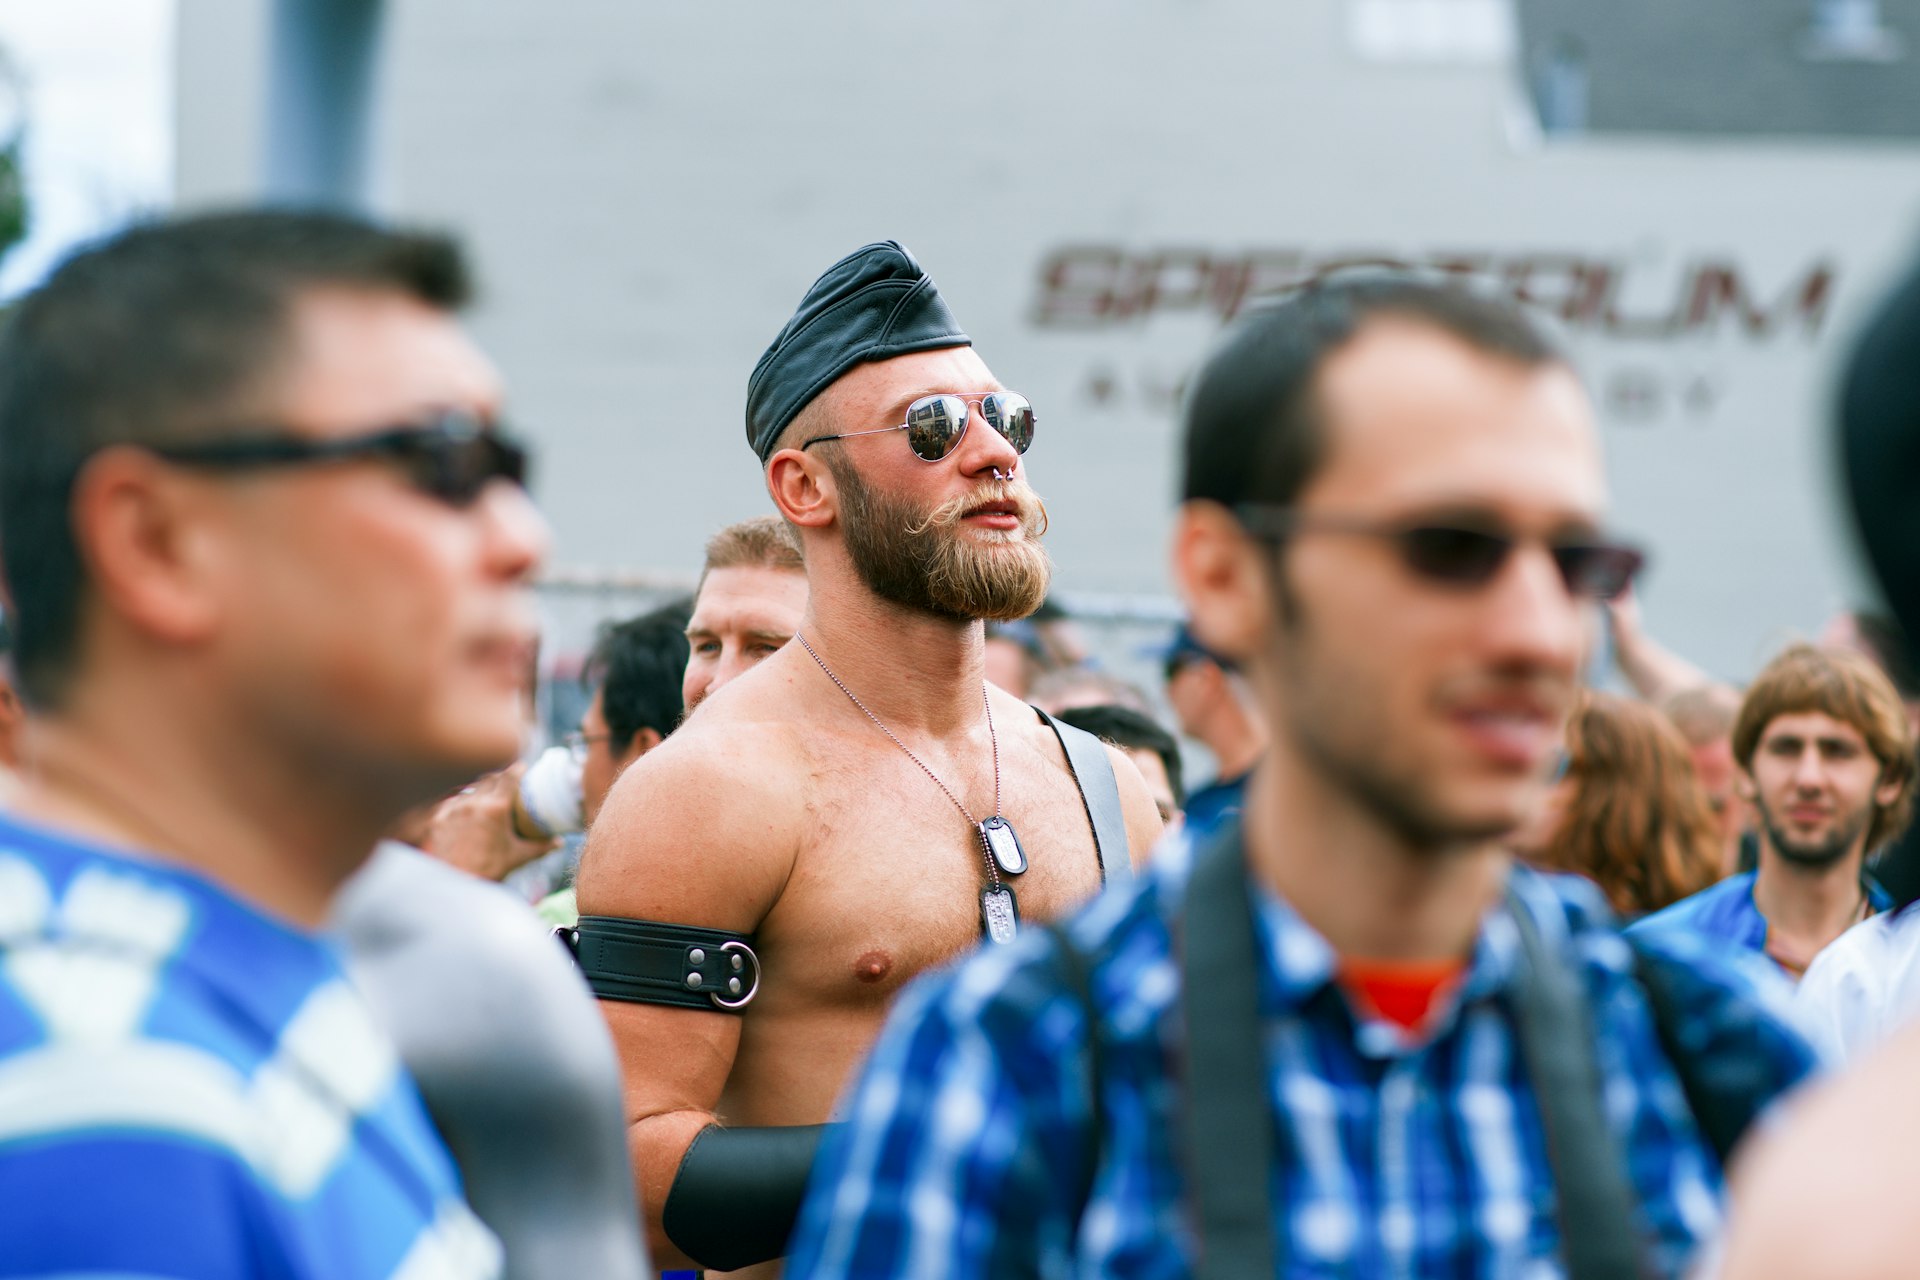 Unidentified people at the annual LGBTQI+ festival Folsom Street Fair in San Francisco